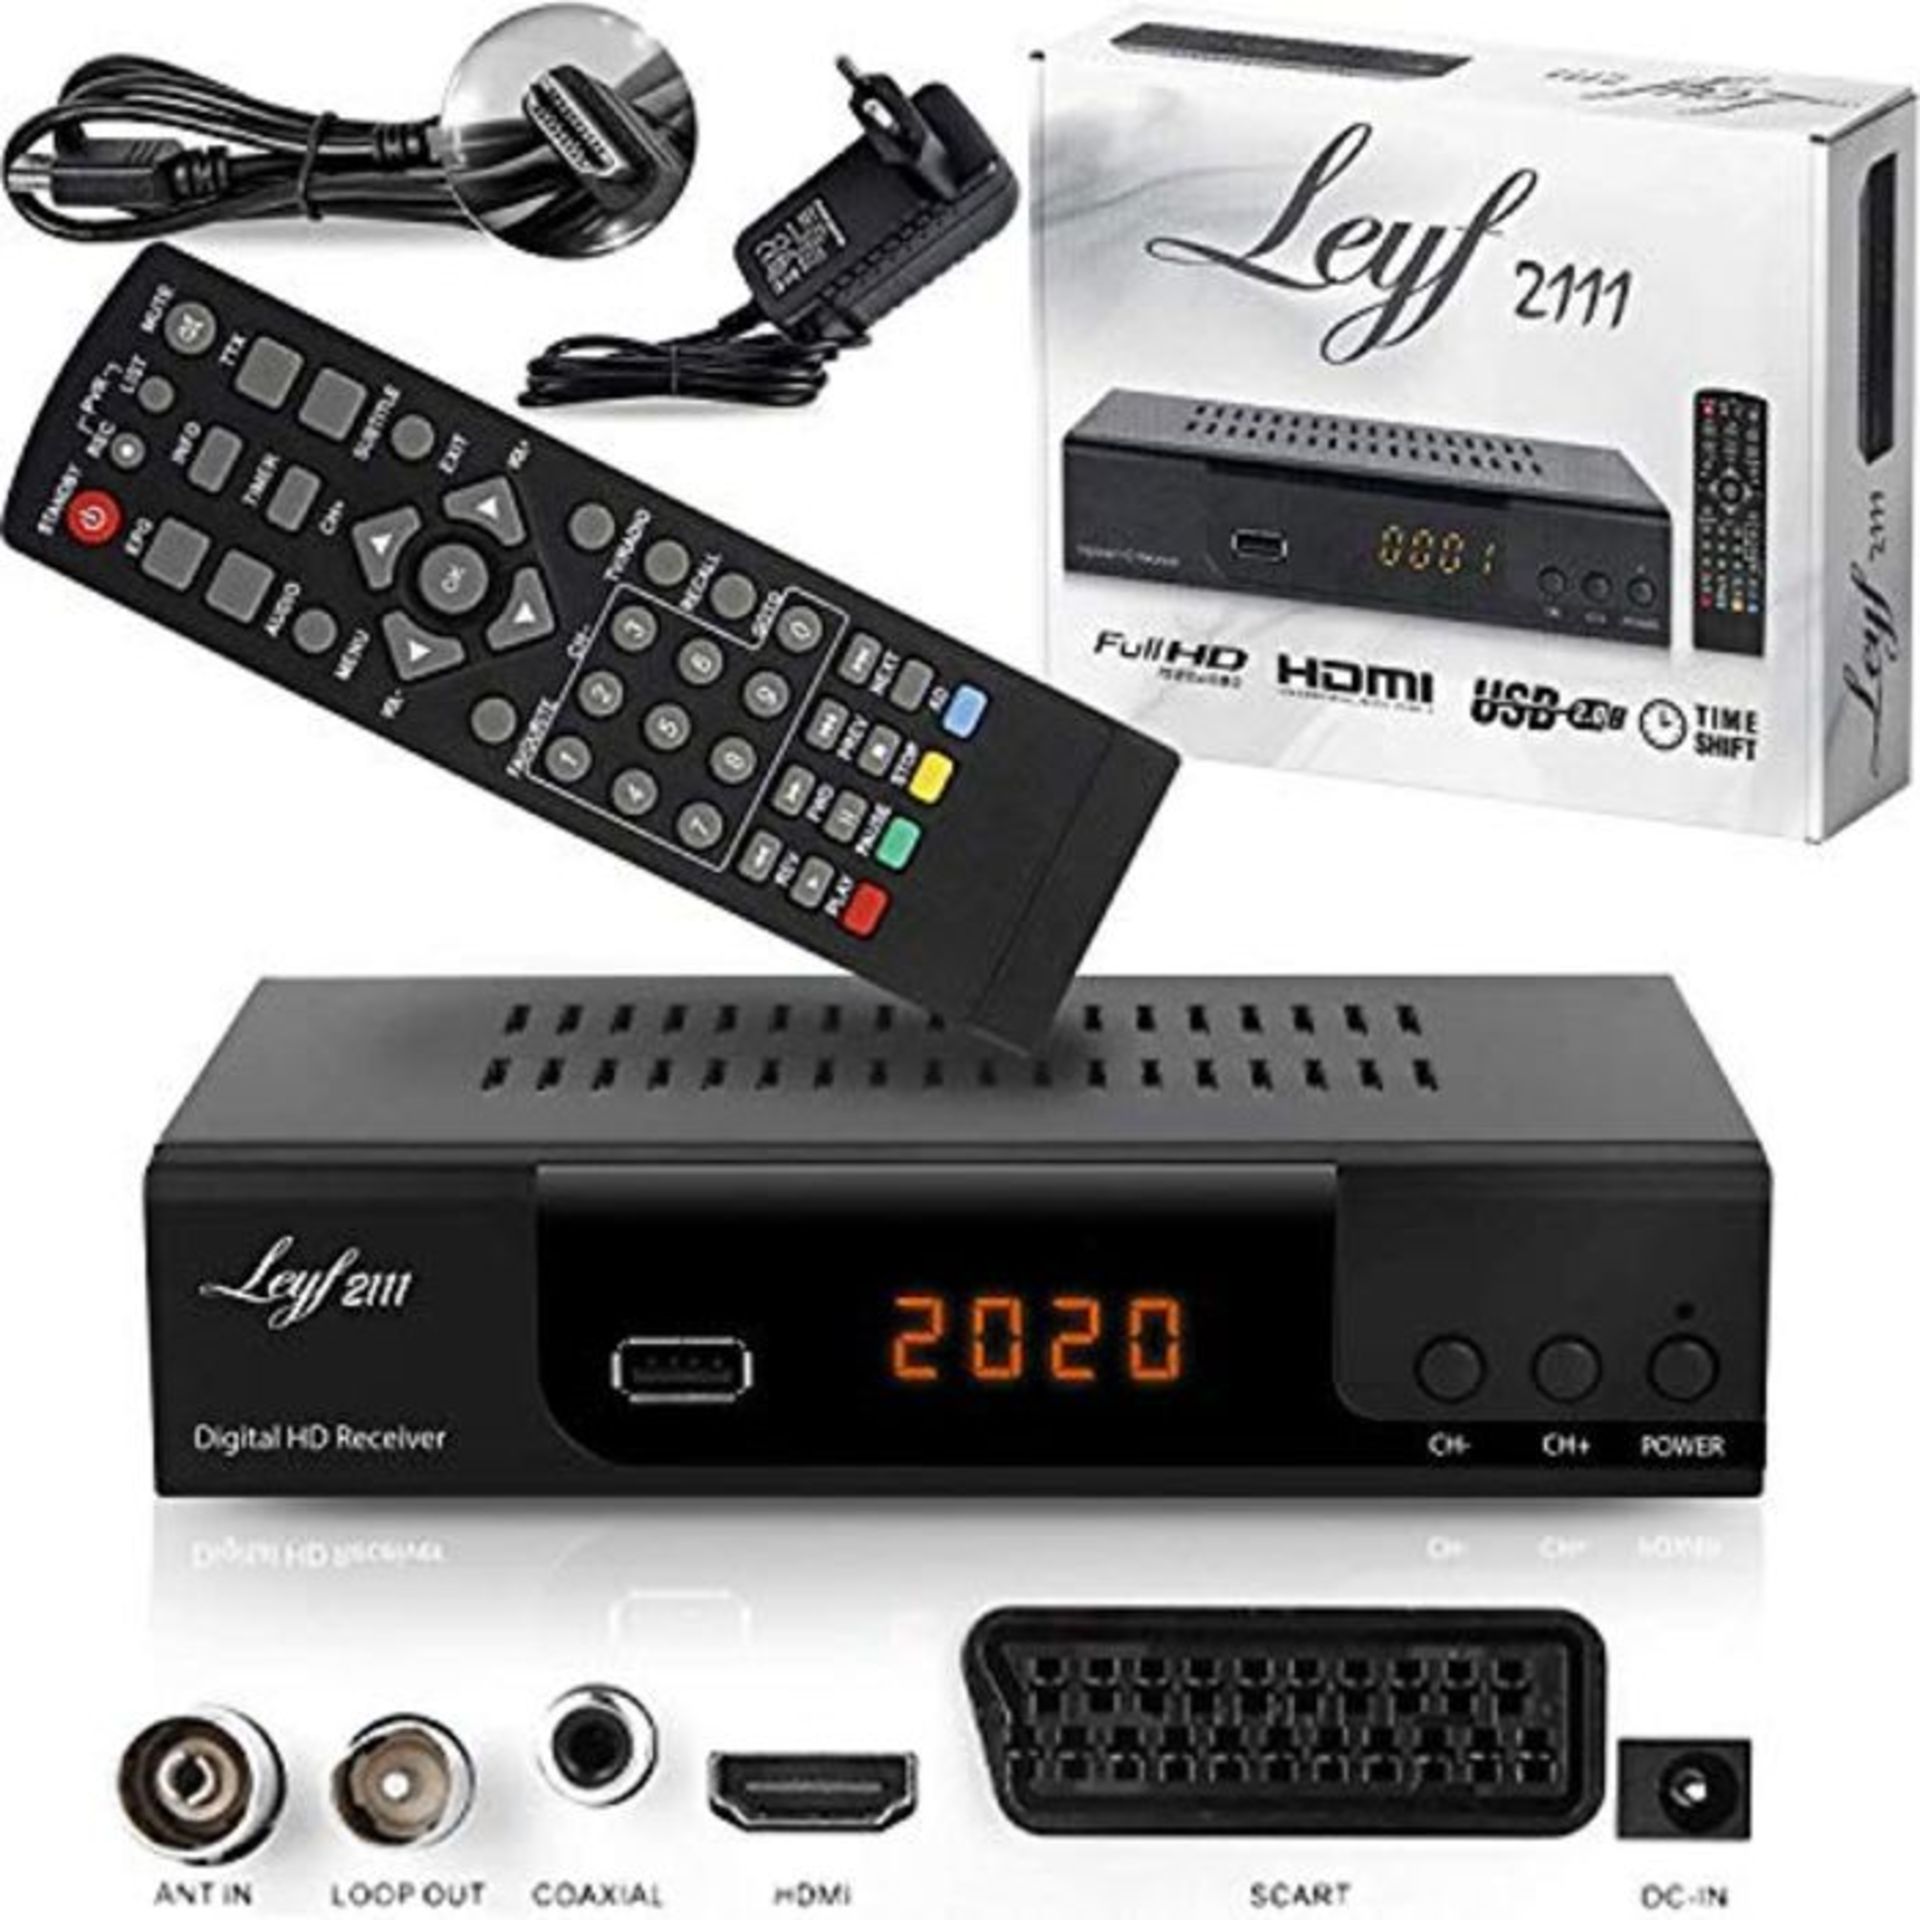 hd-line LEYF2111C Cable Receiver for Digital Cable TV - DVB-C (HDTV, DVB-C / C2, DVB-T